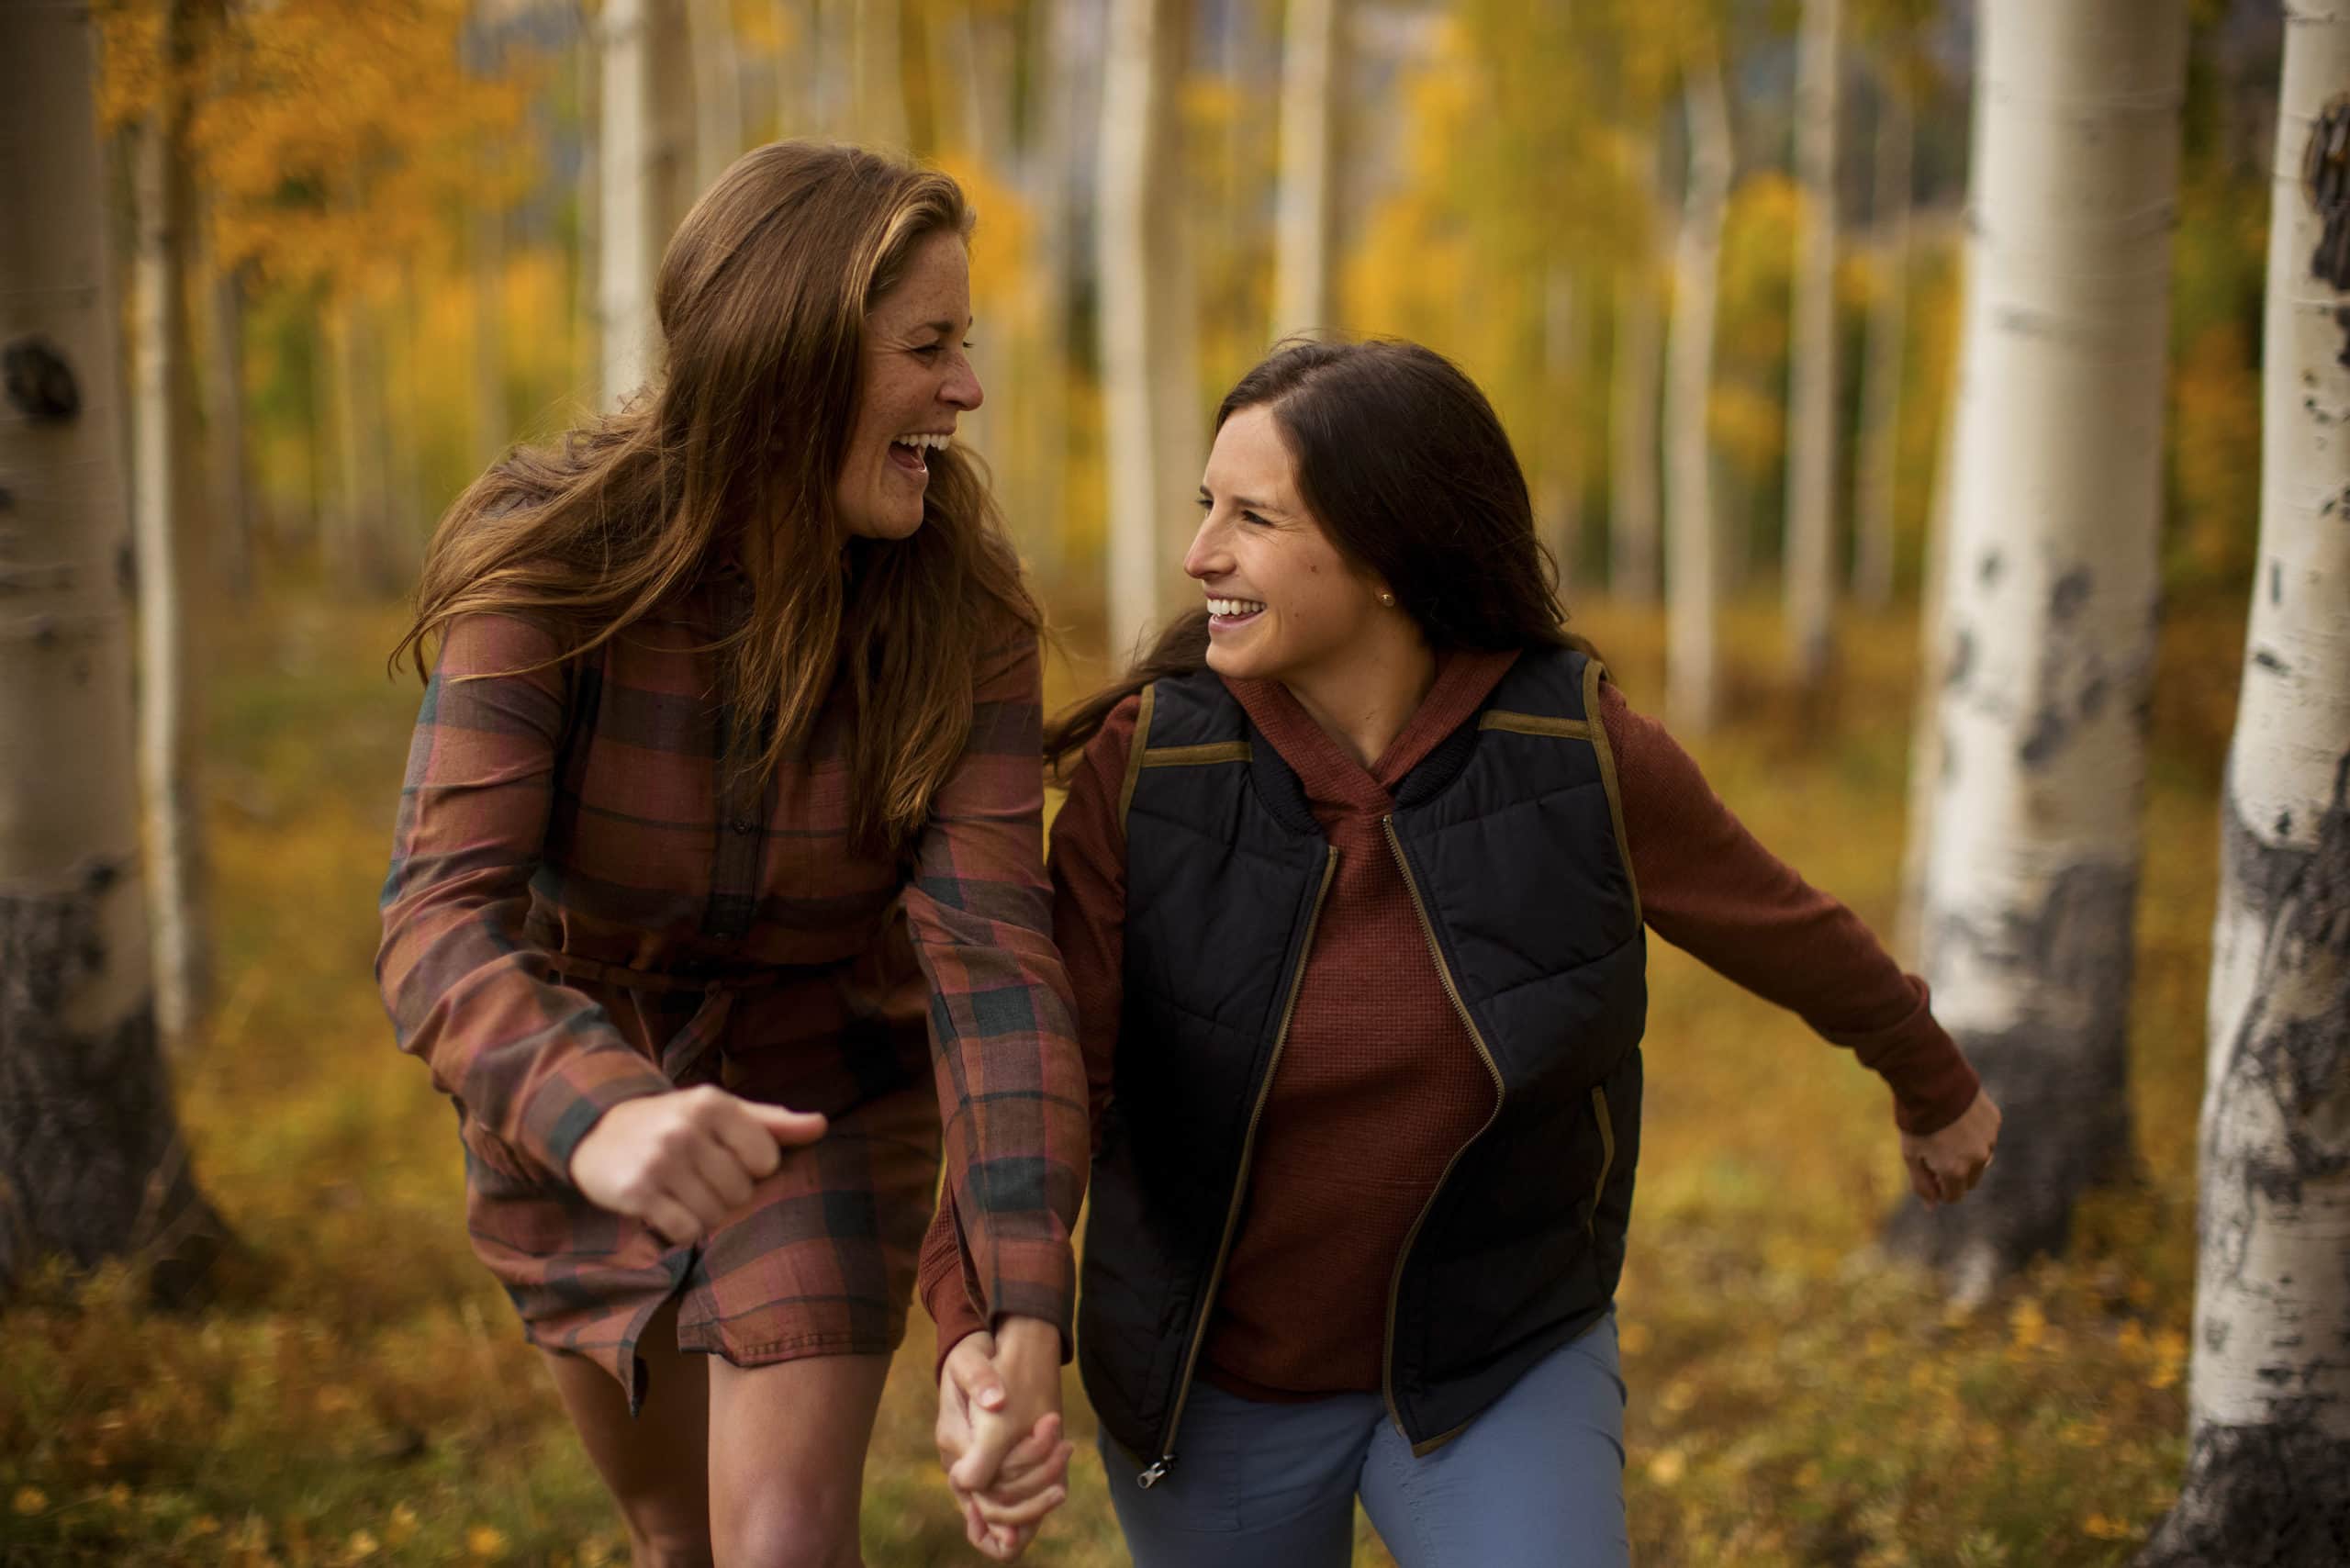 A same sex couple runs together in an aspen grove in Mountain Village, Colorado during their engagement photos